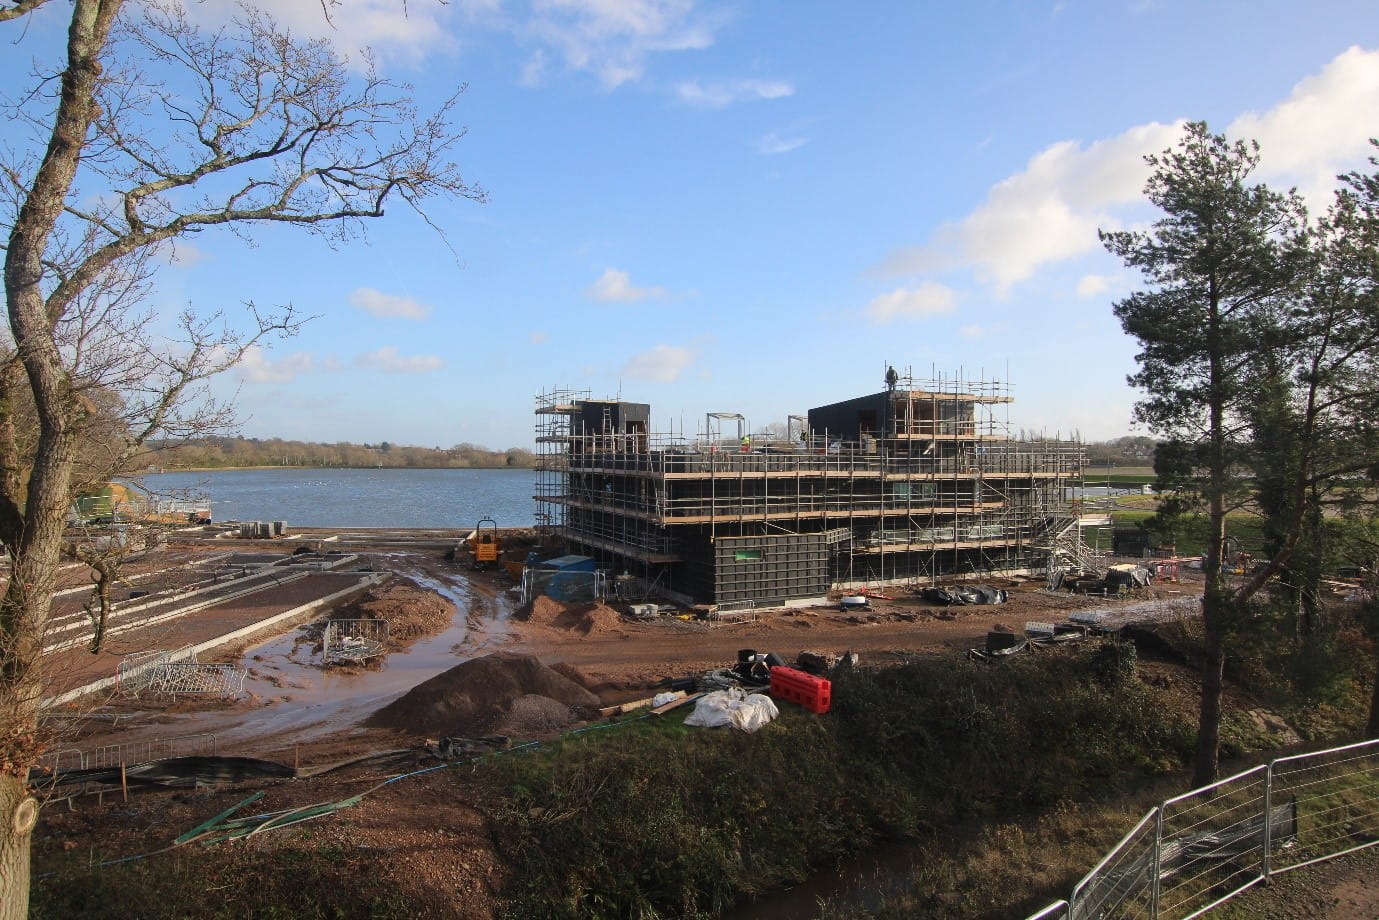 New visitor hub at Lisvane and Llanishen reservoirs starts to take shape